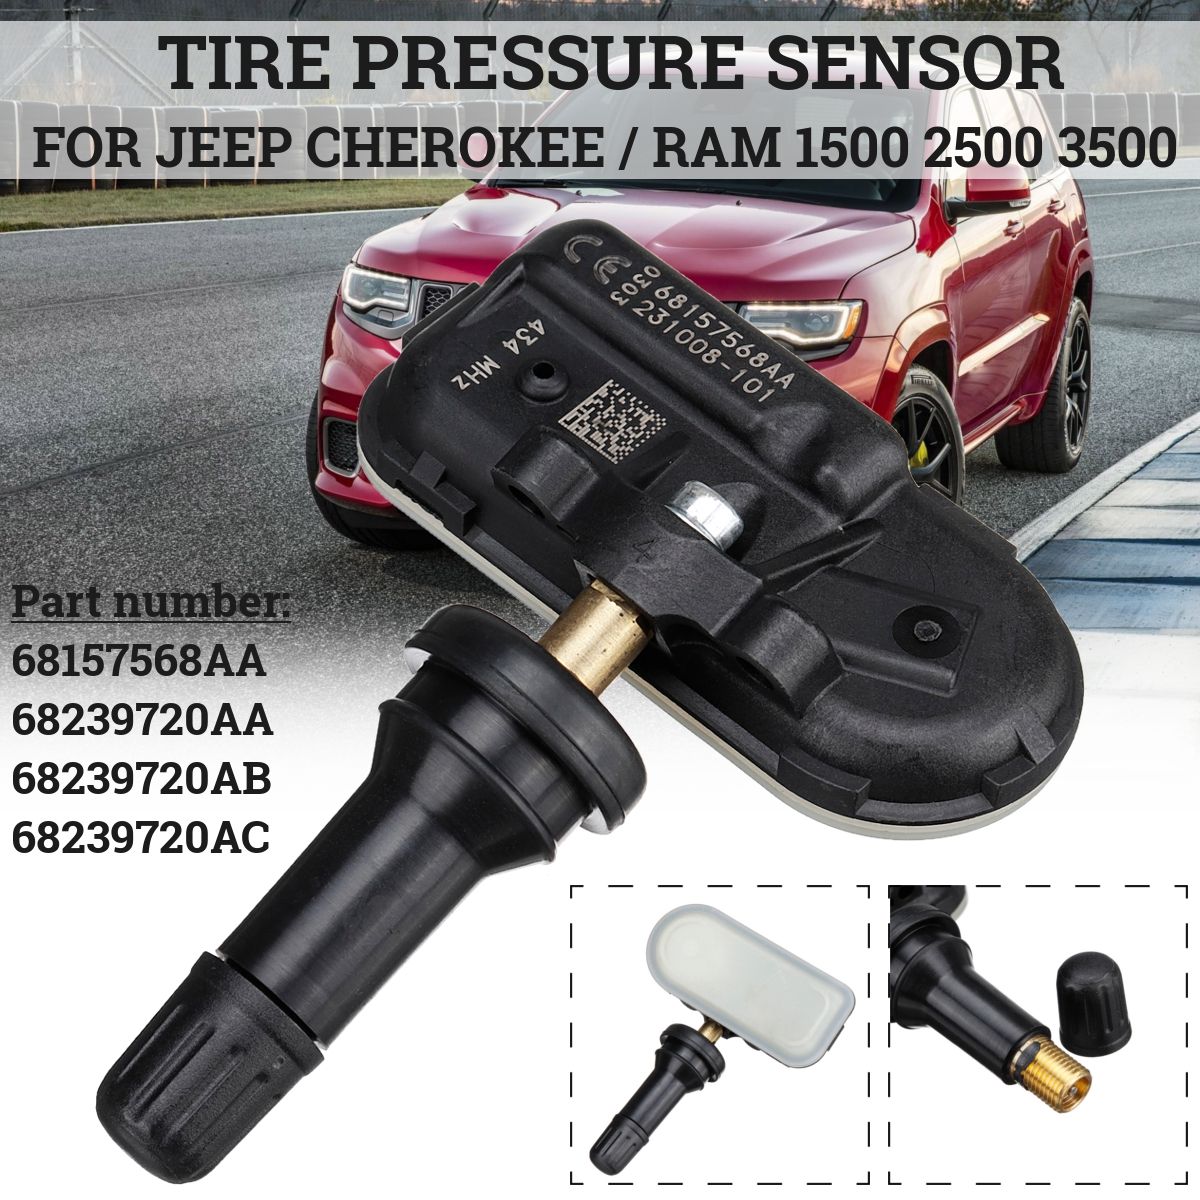 Tire-Pressure-Sensor-TPMS-For-Ram-1500-2500-3500-Cargo-Jeep-Cherokee-68157568AA-1728750